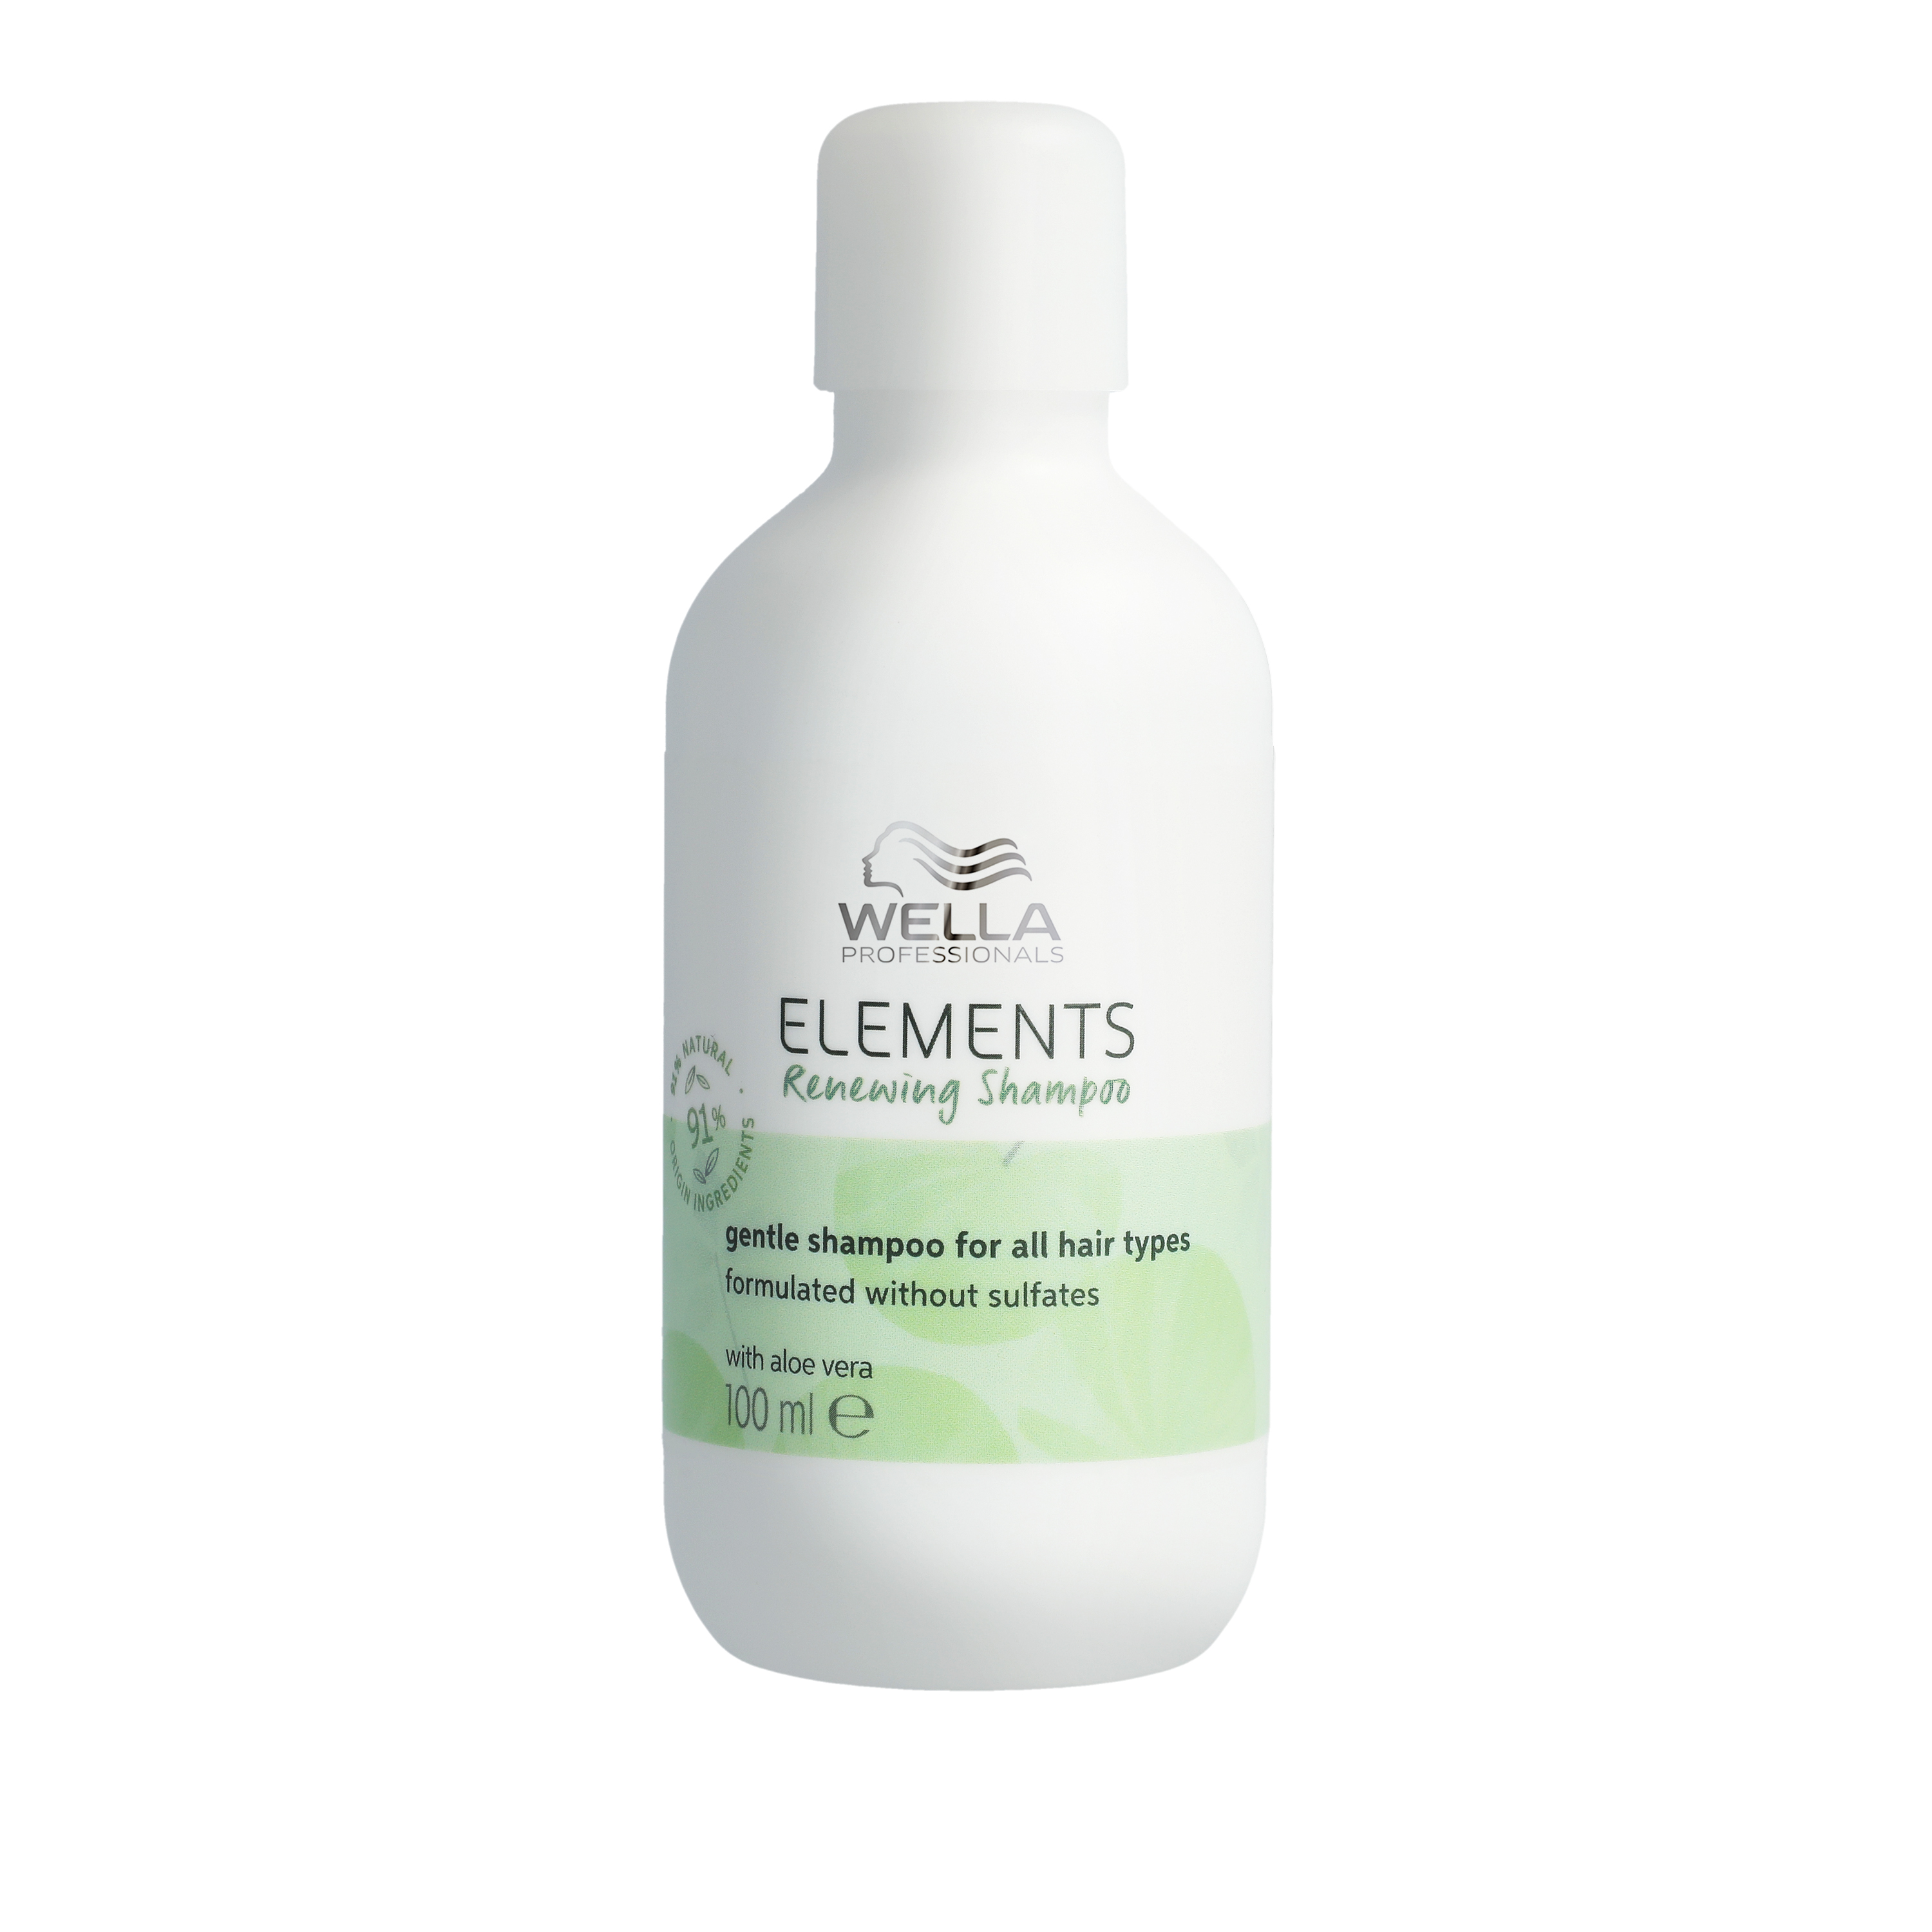 Wella Elements Renewing Shampoo 100ml